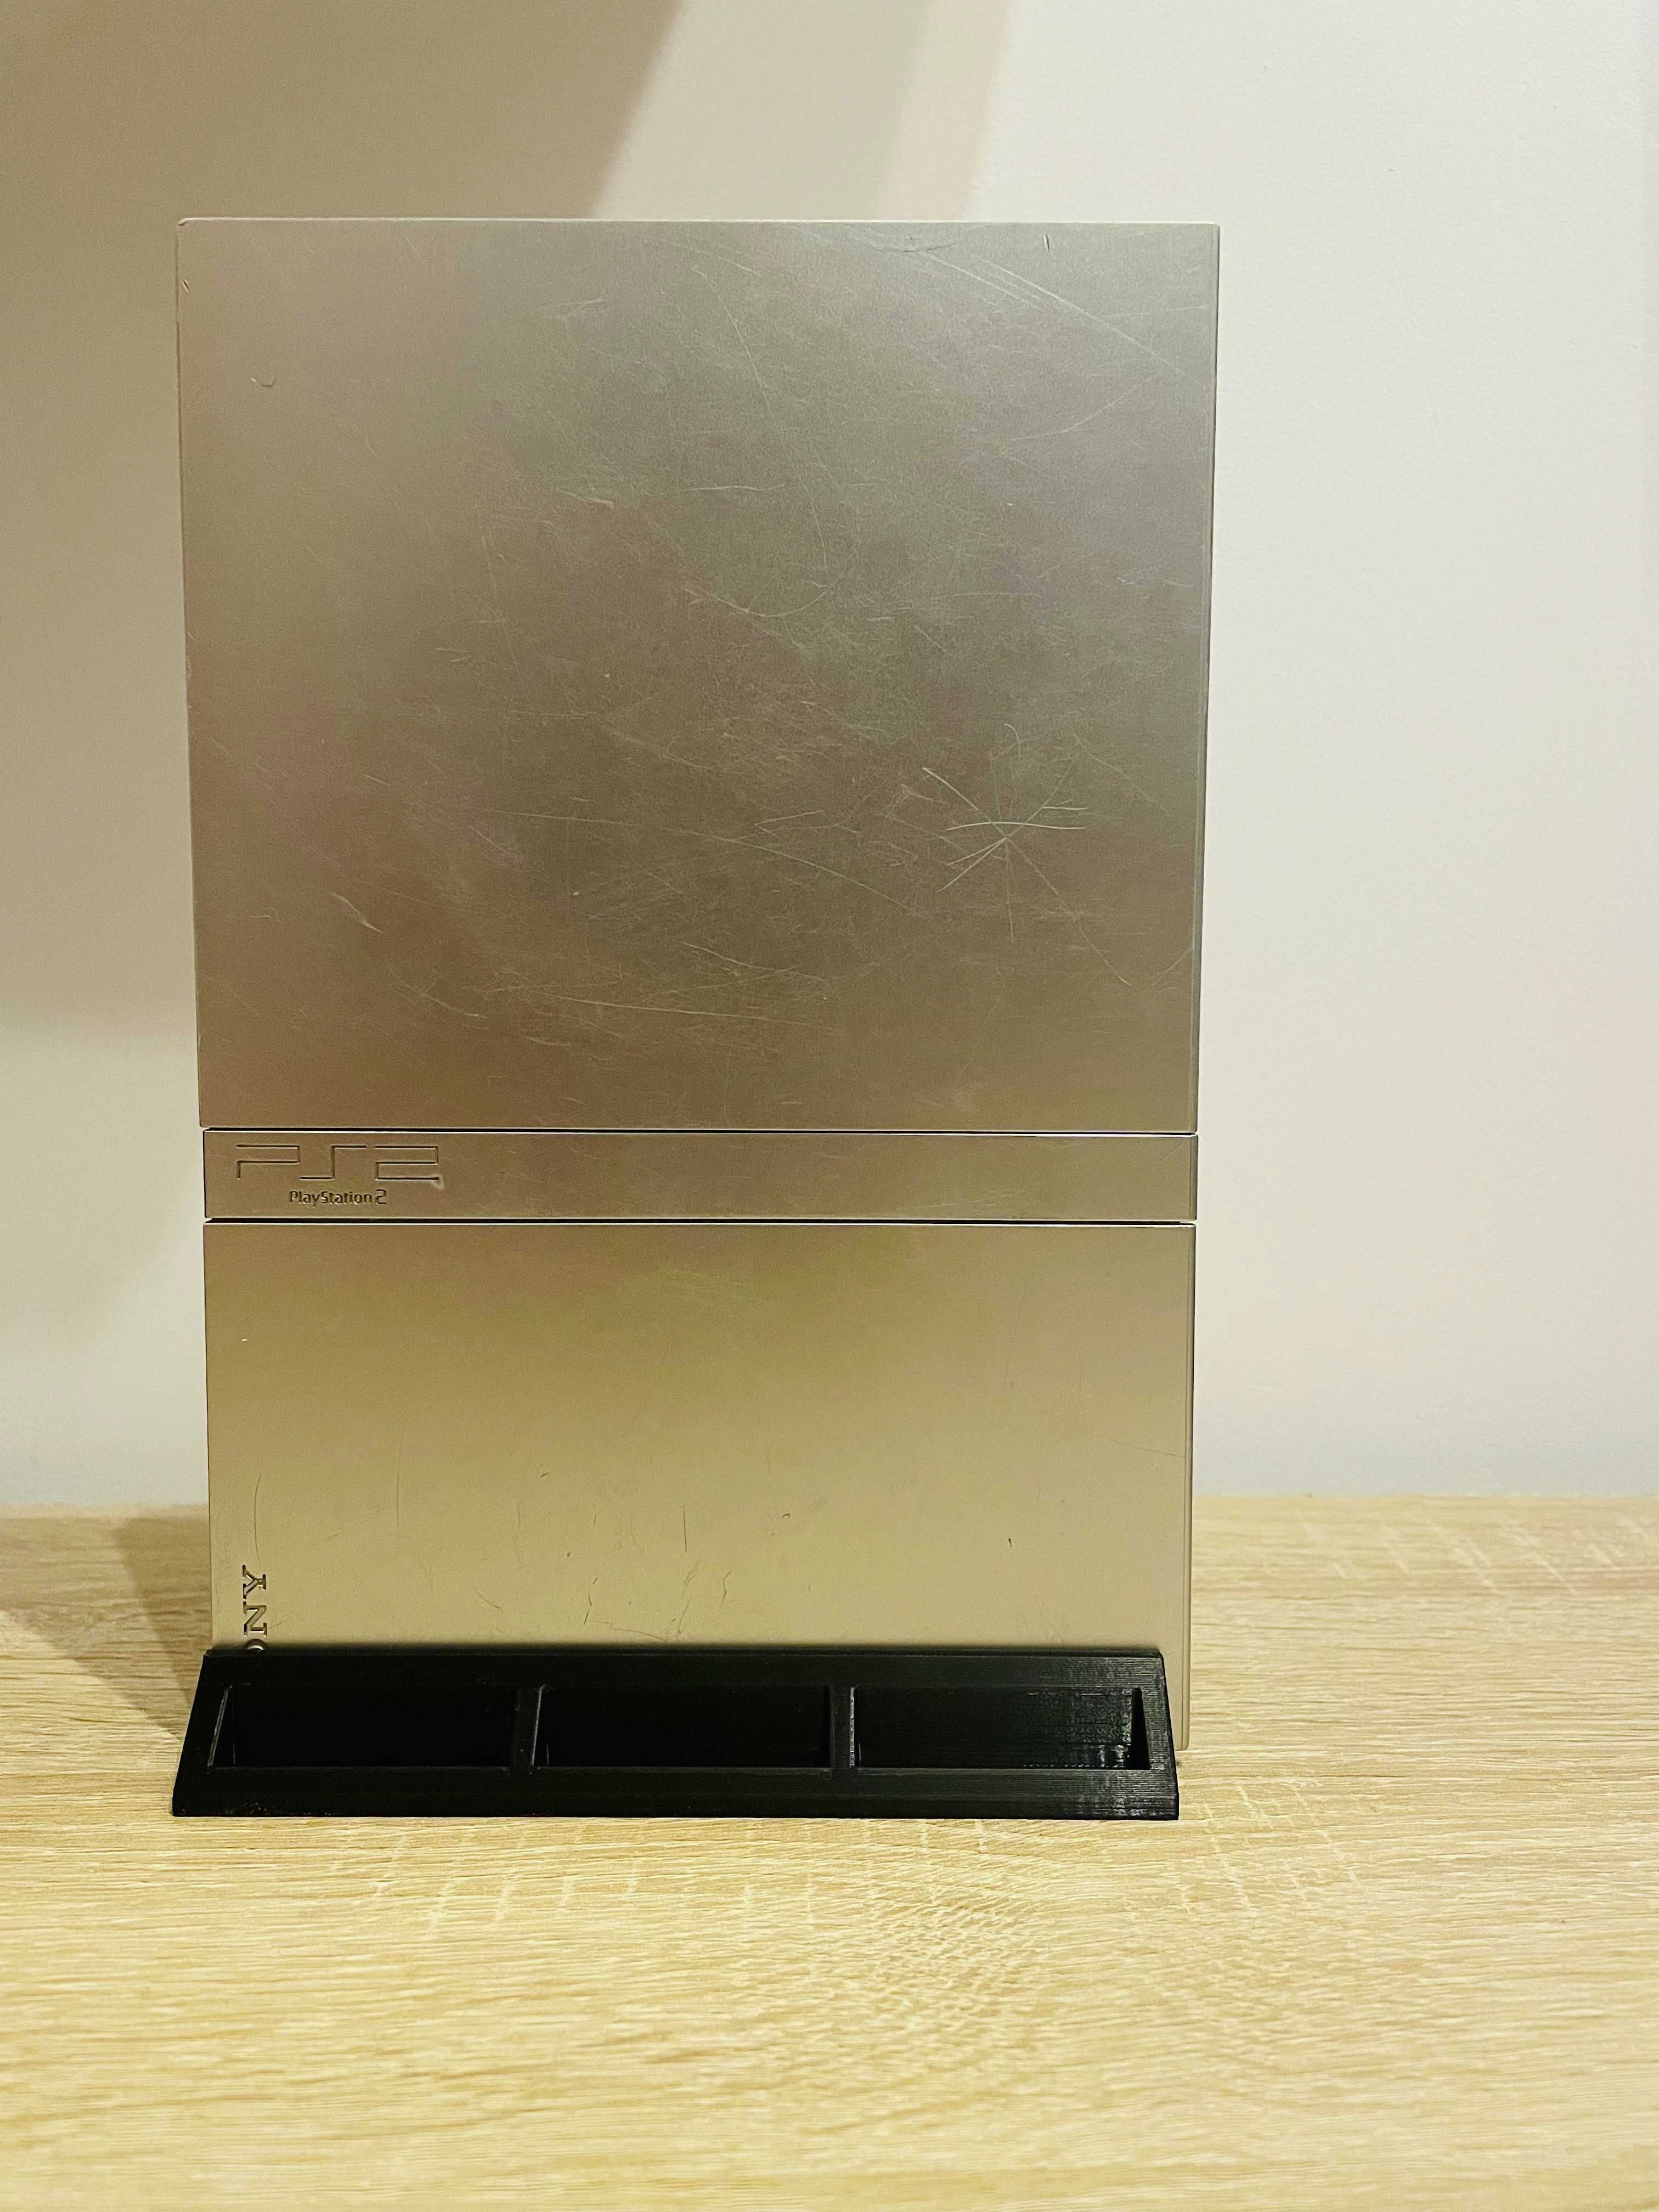 Playstation 2 slim suport vertical cu memory cards - accesorii PS2